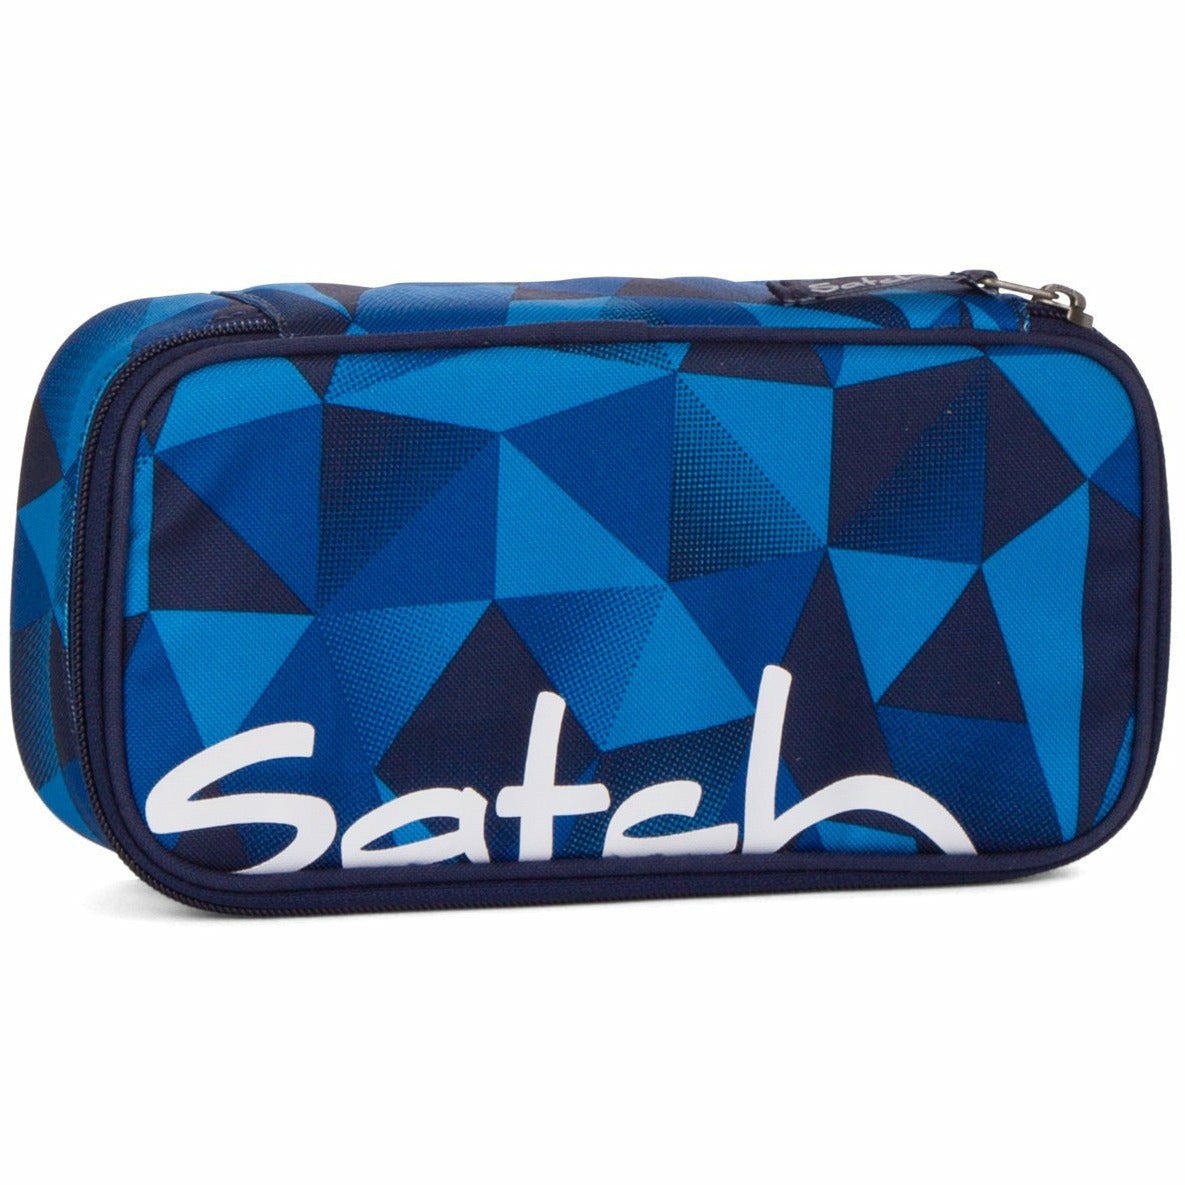 satch | satch Pencil Box | Blue Crush